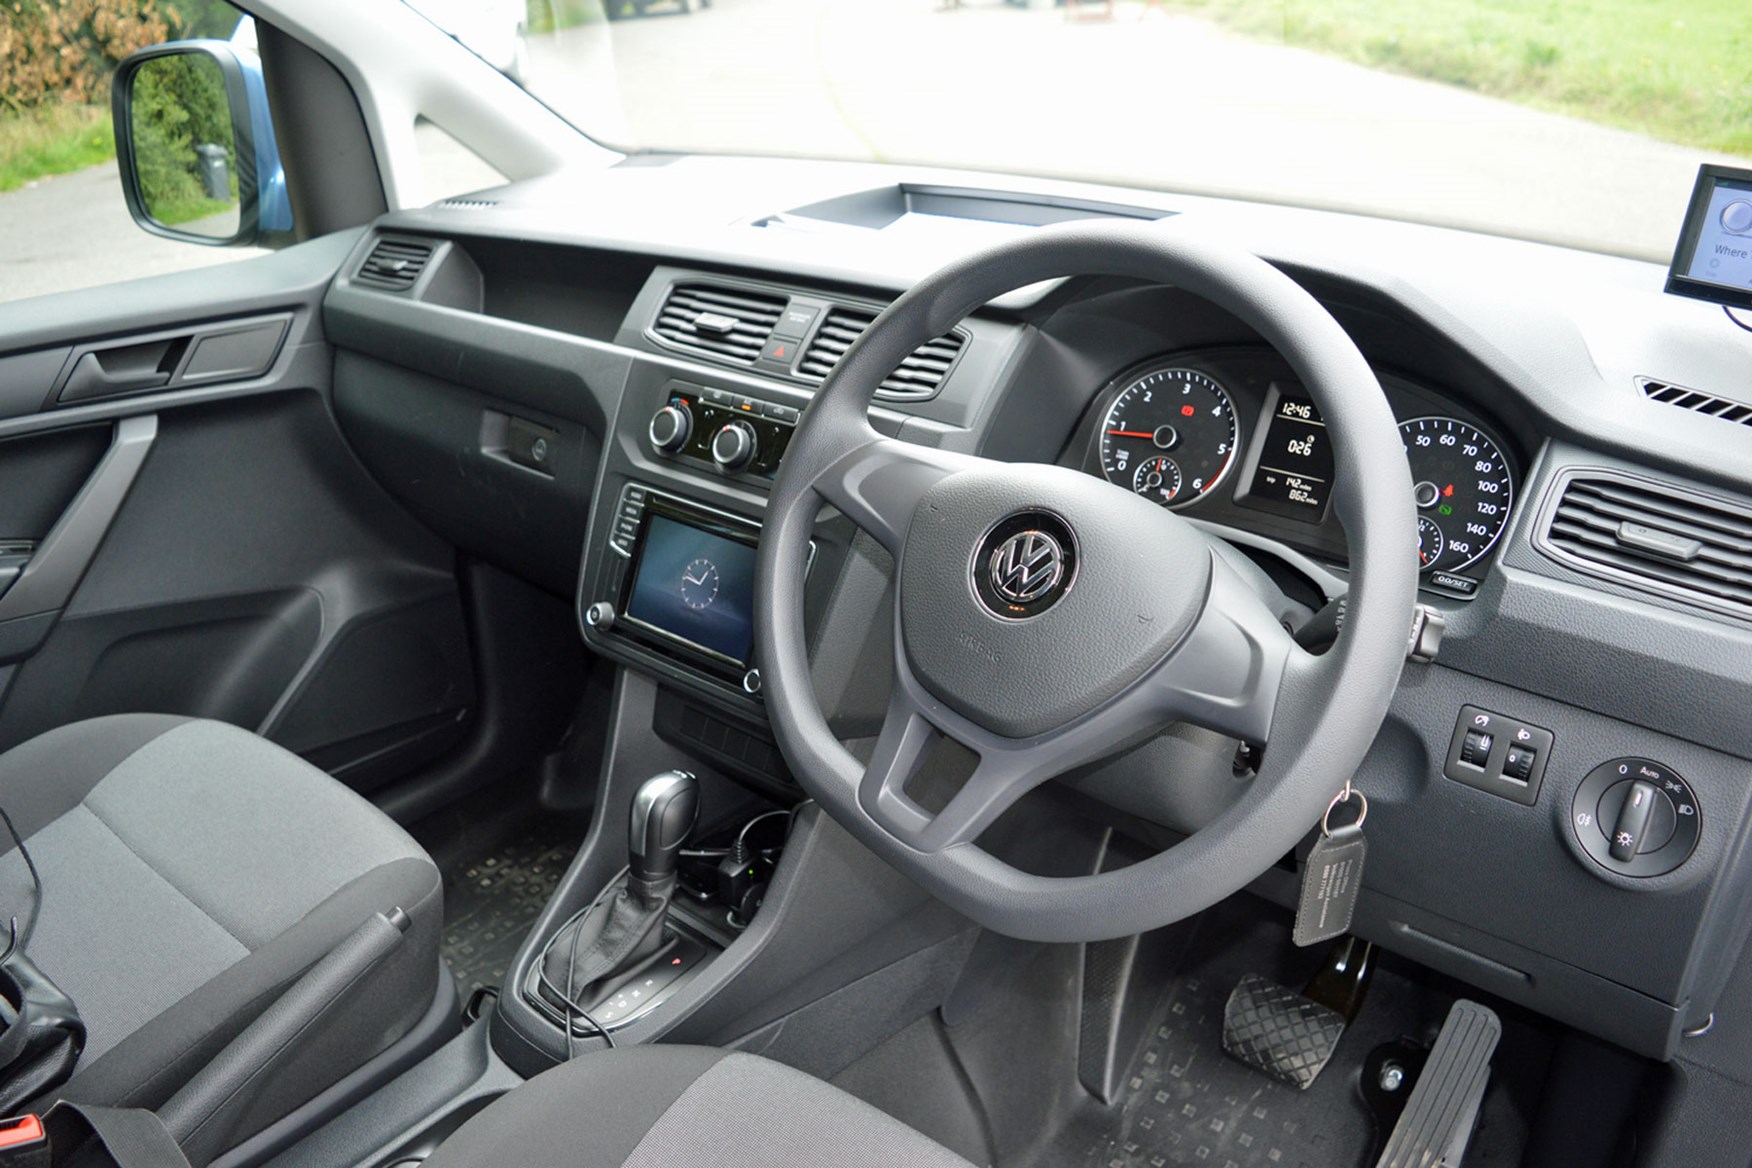 VW Caddy 1.6-litre TDI 102 DSG review - cab interior, 2015